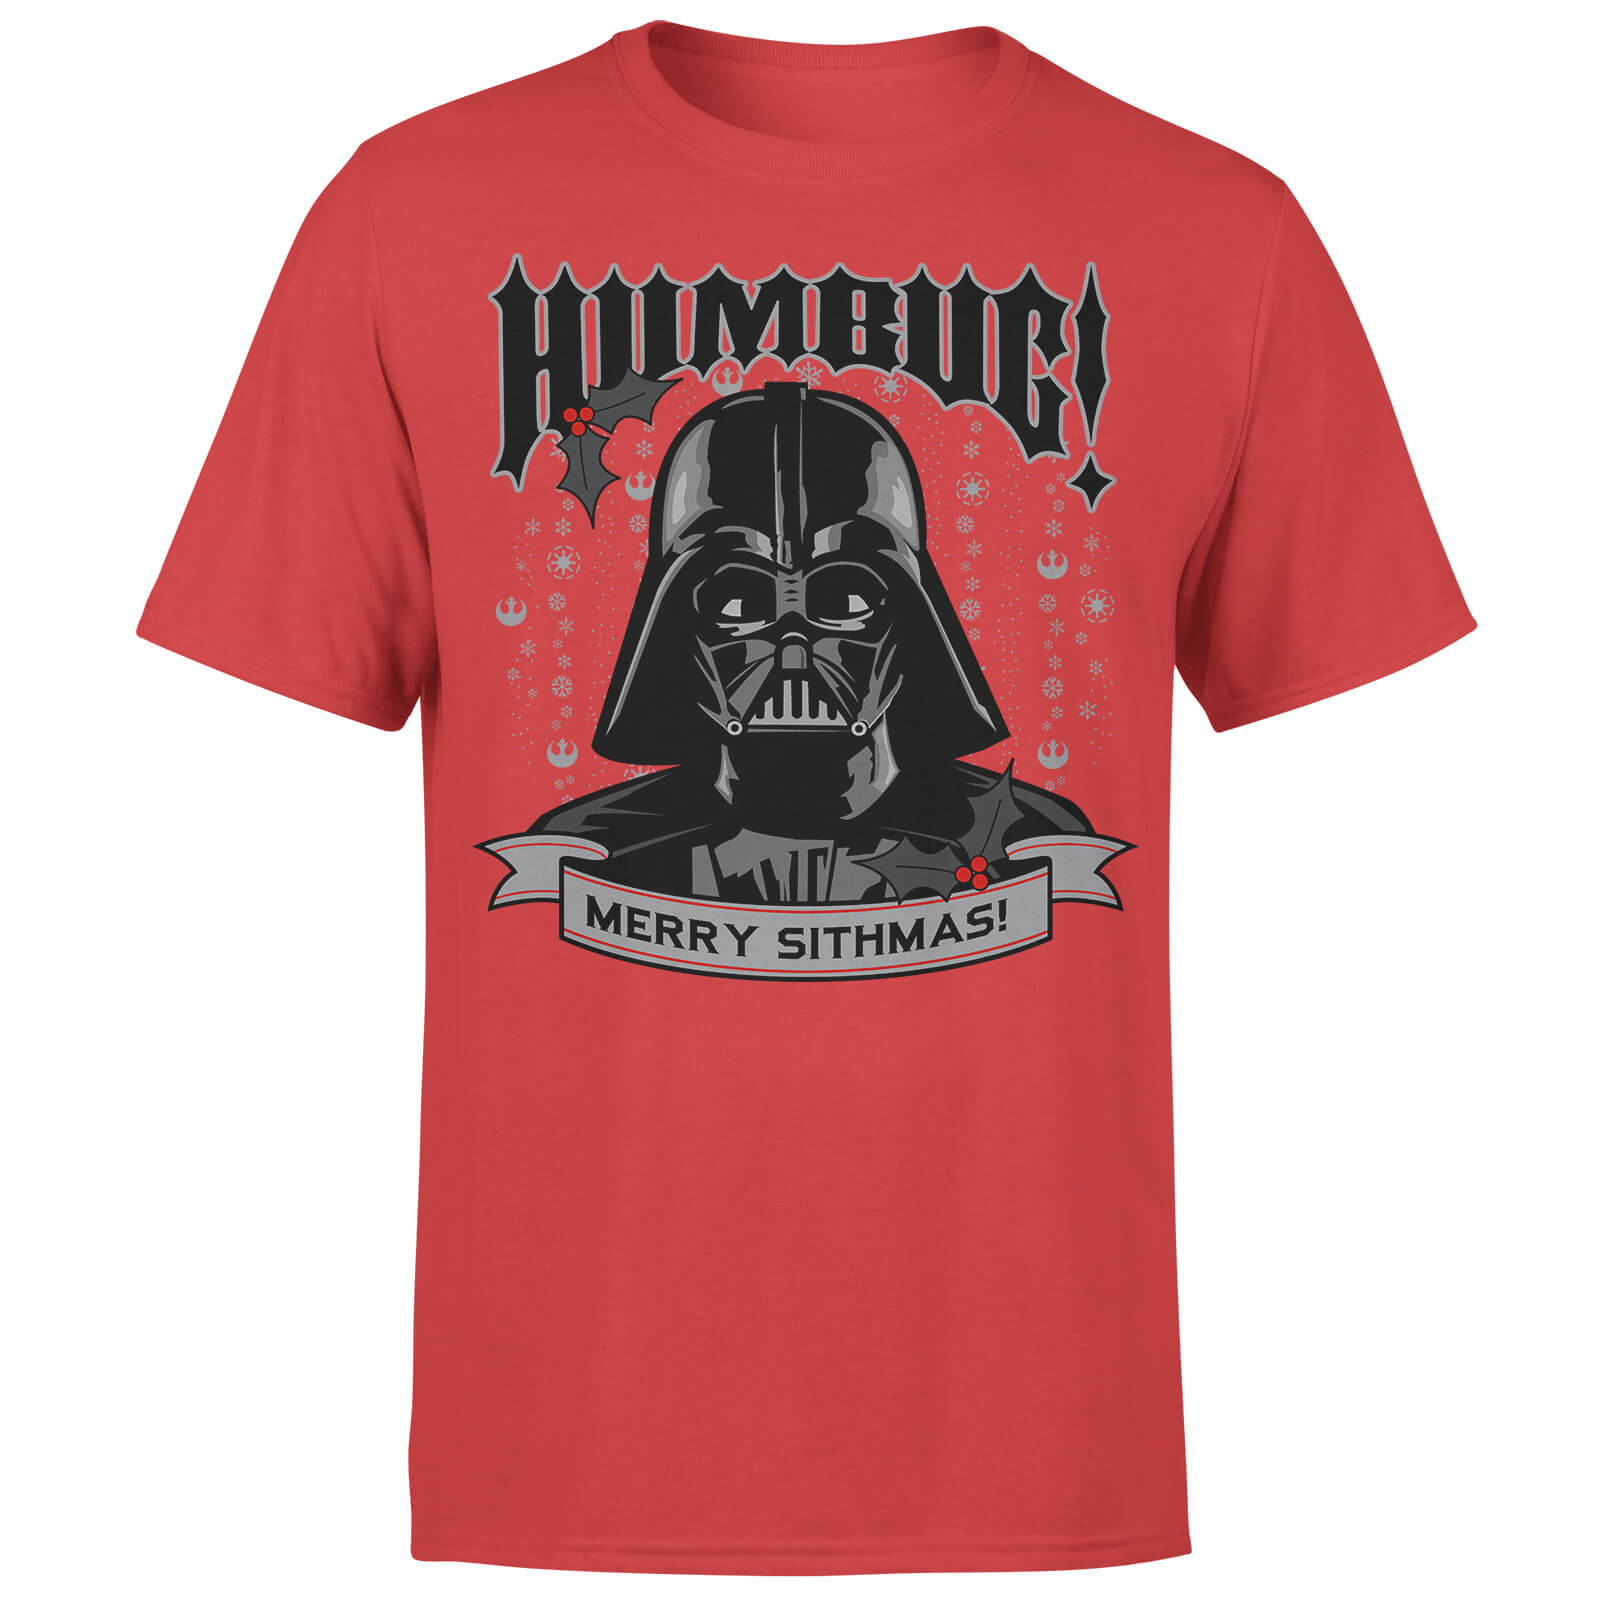 T-Shirt Homme Effet Tricot Visage Stormtrooper Star Wars - Rouge - S